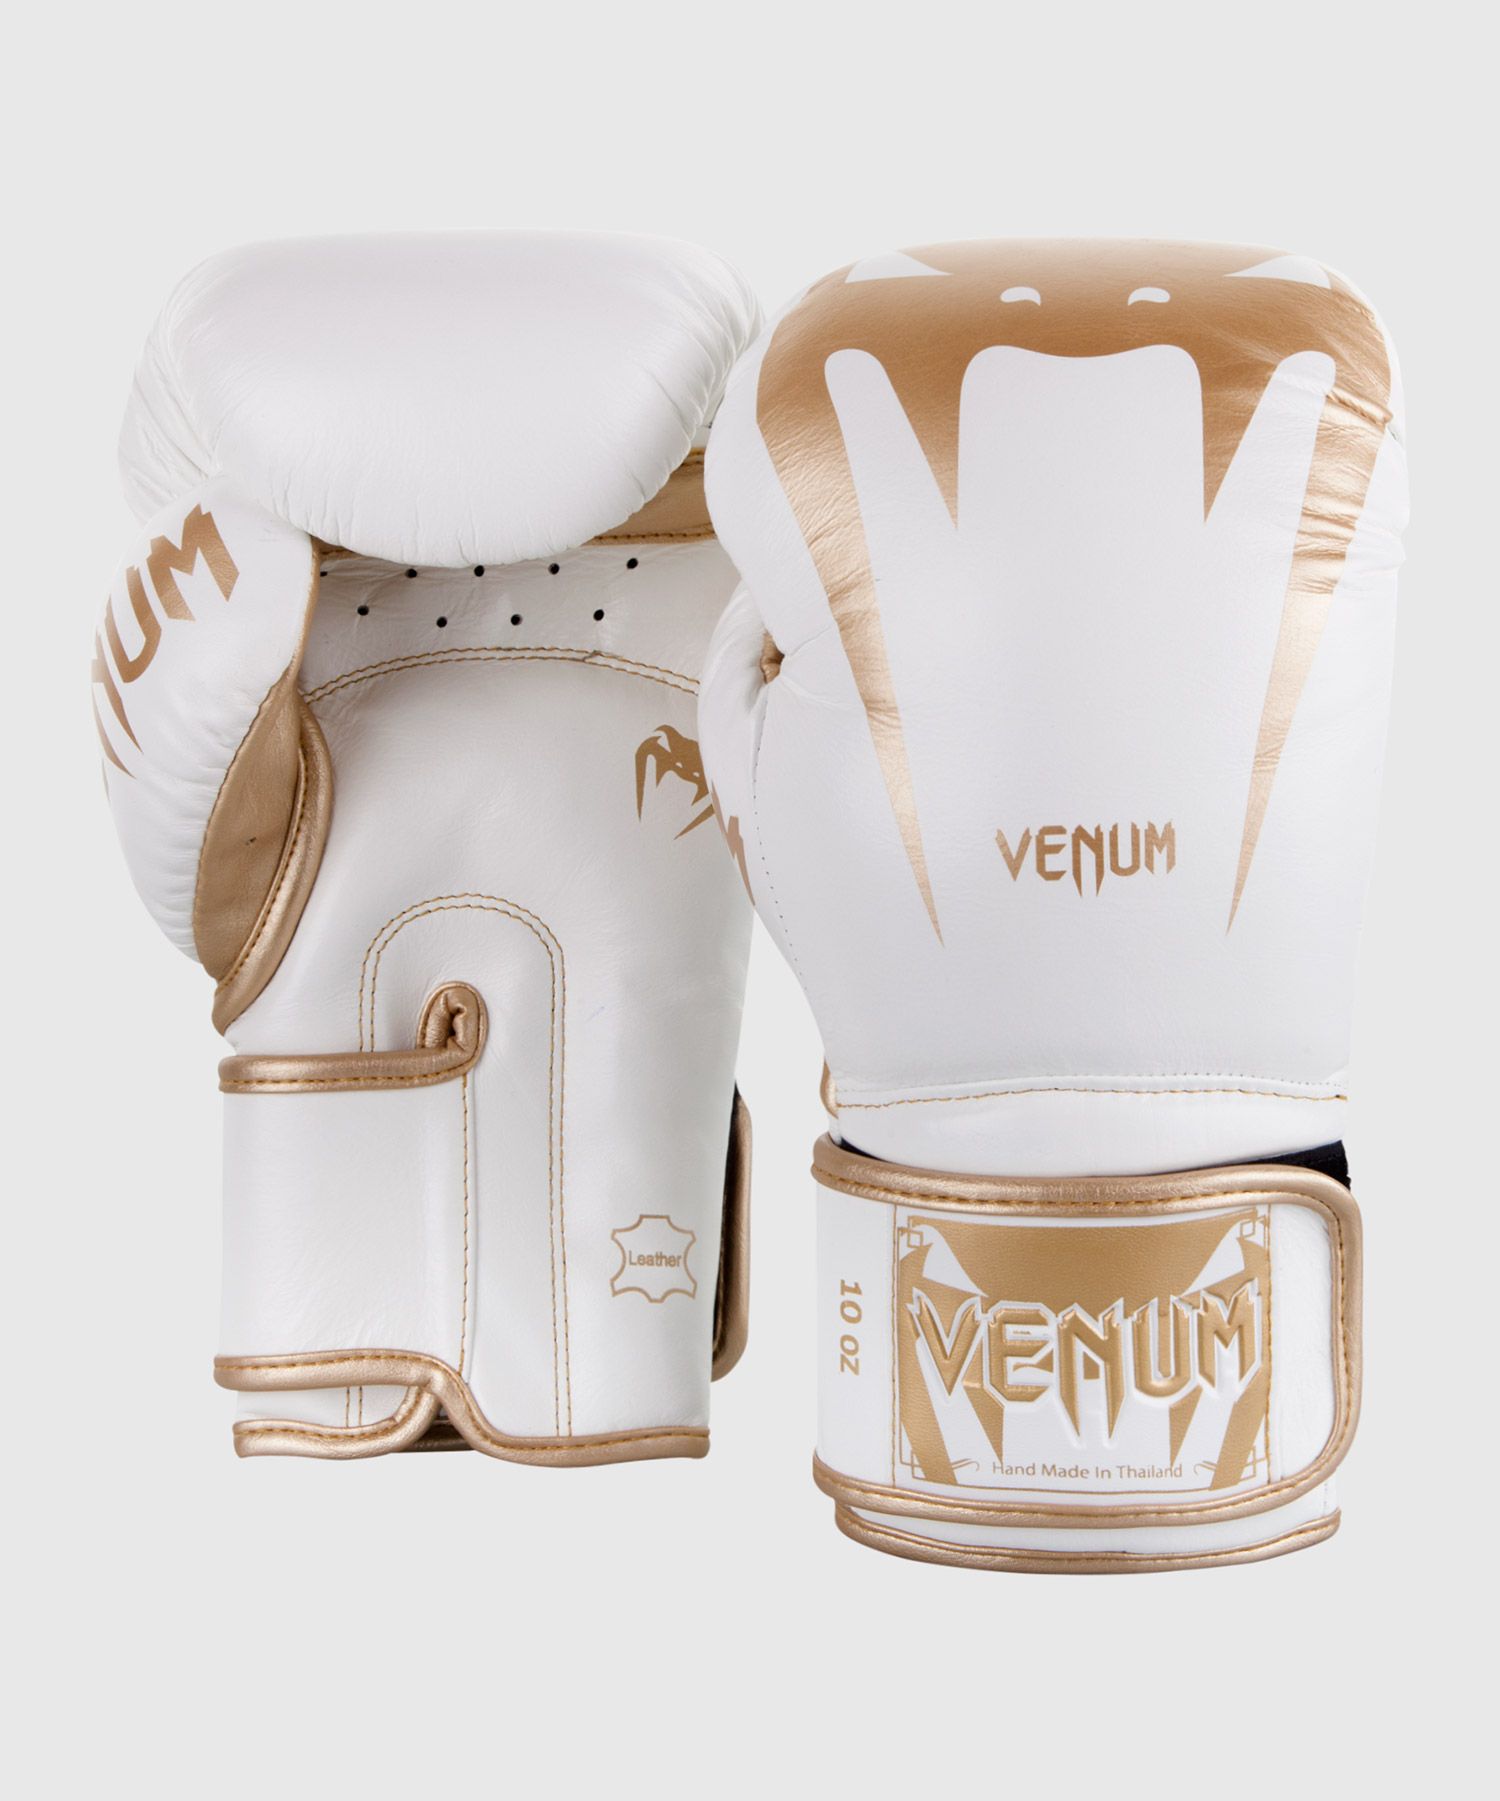 Venum Giant 3.0 ボクシング グローブ - ナッパ レザー - ホワイト/ゴールド